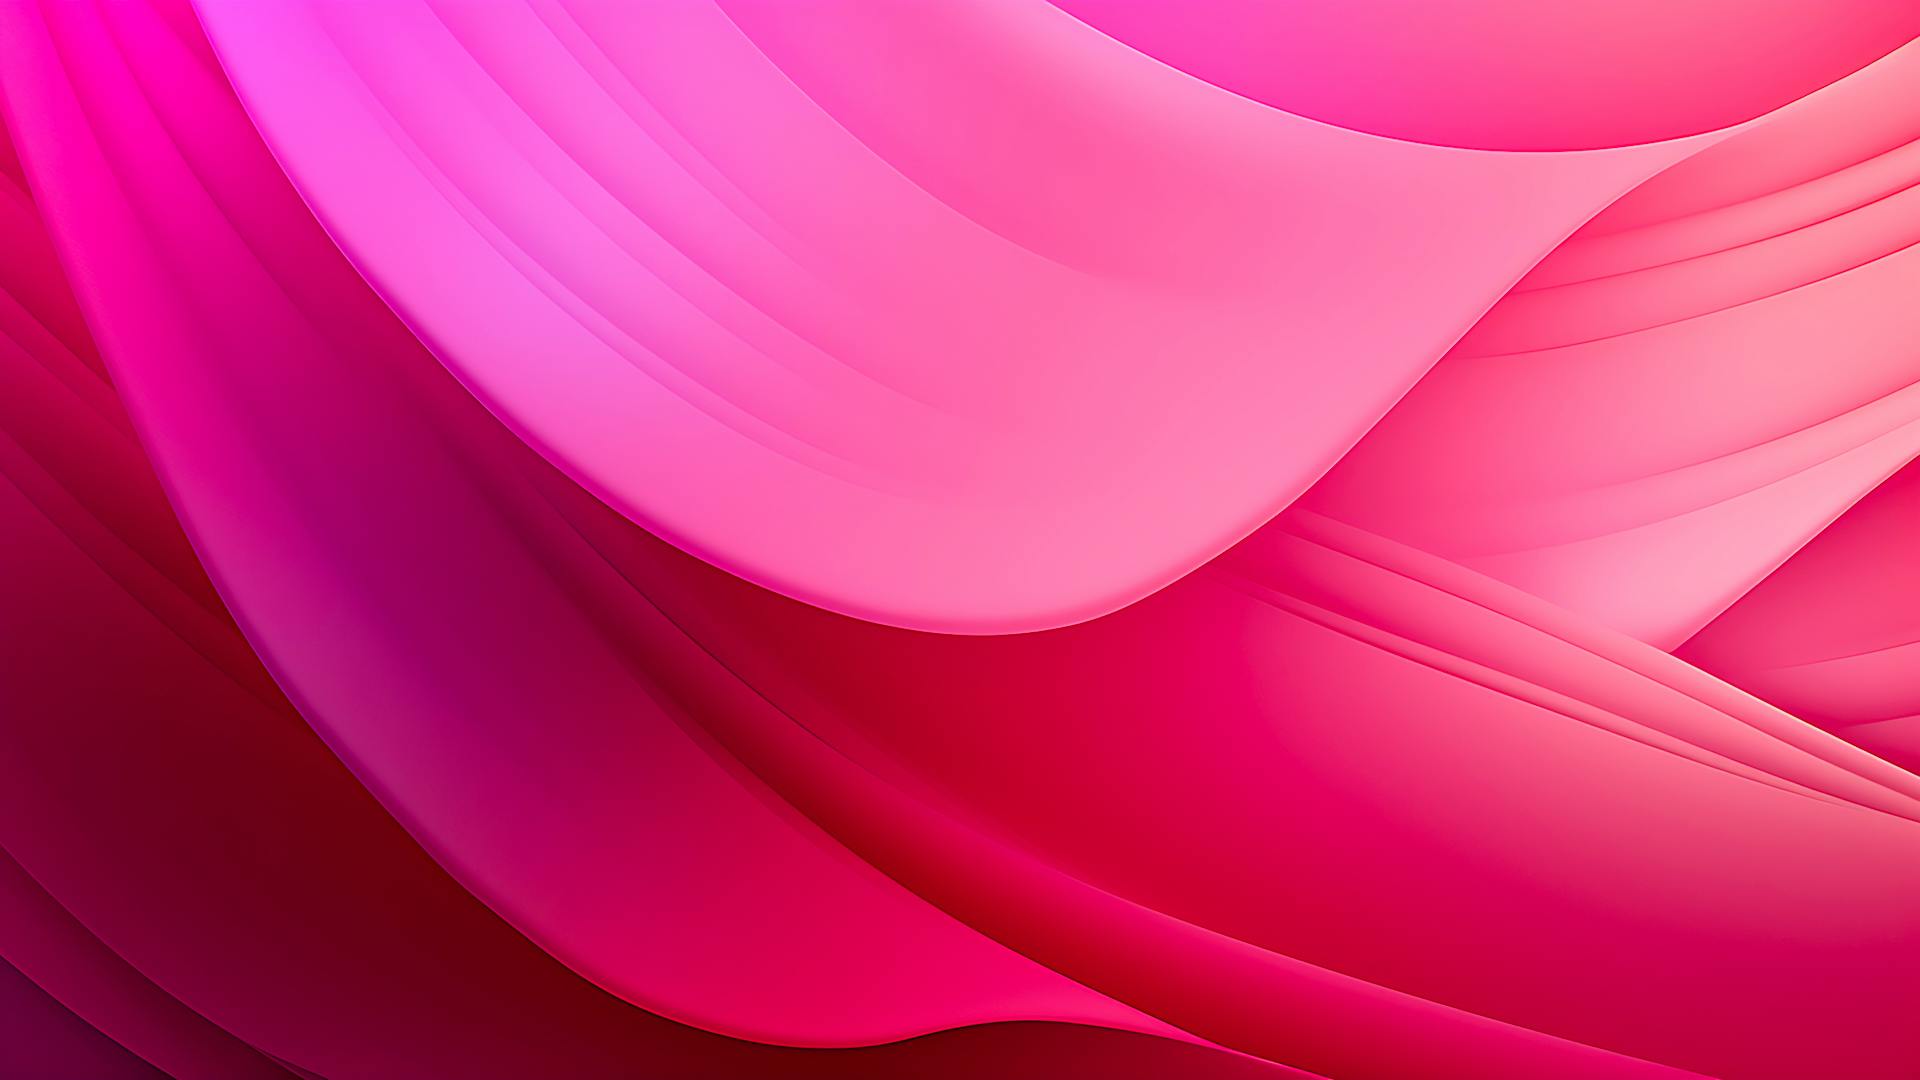 gradient wallpaper 2 showing Pretty in Pink wallpaper pack